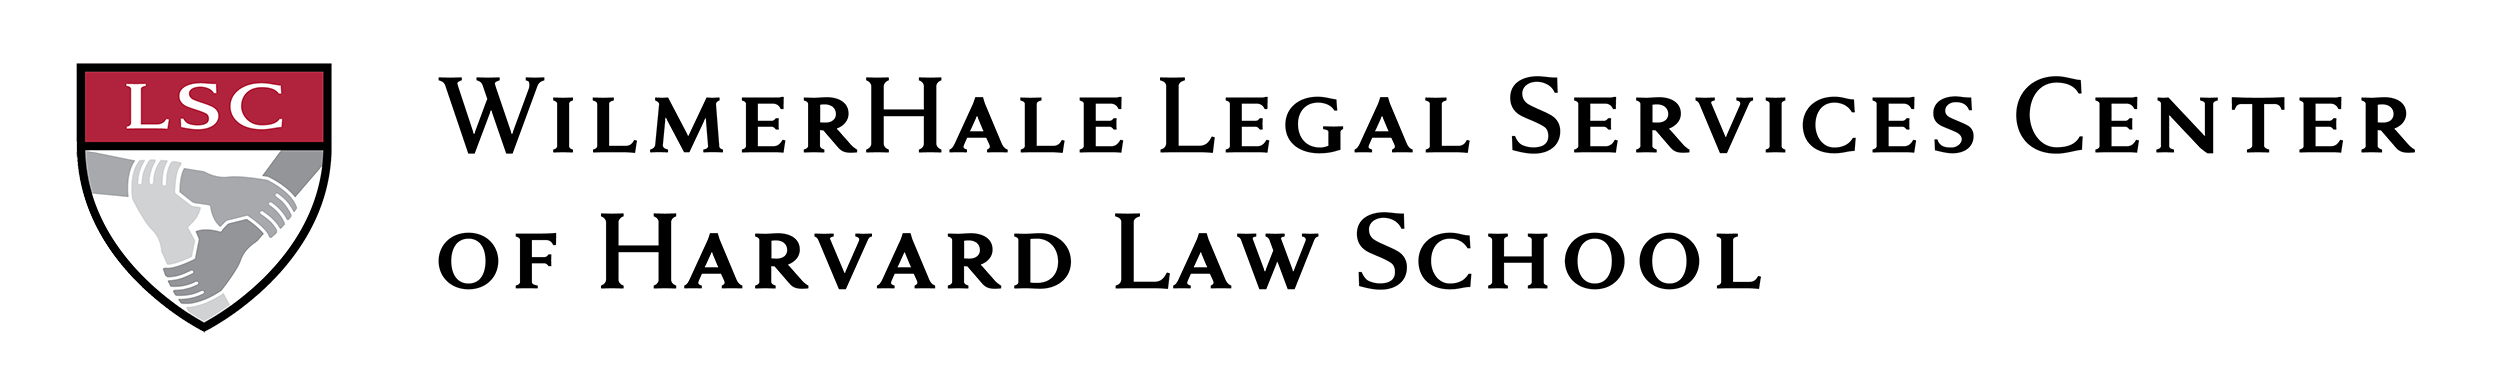 Legal Services logo retina